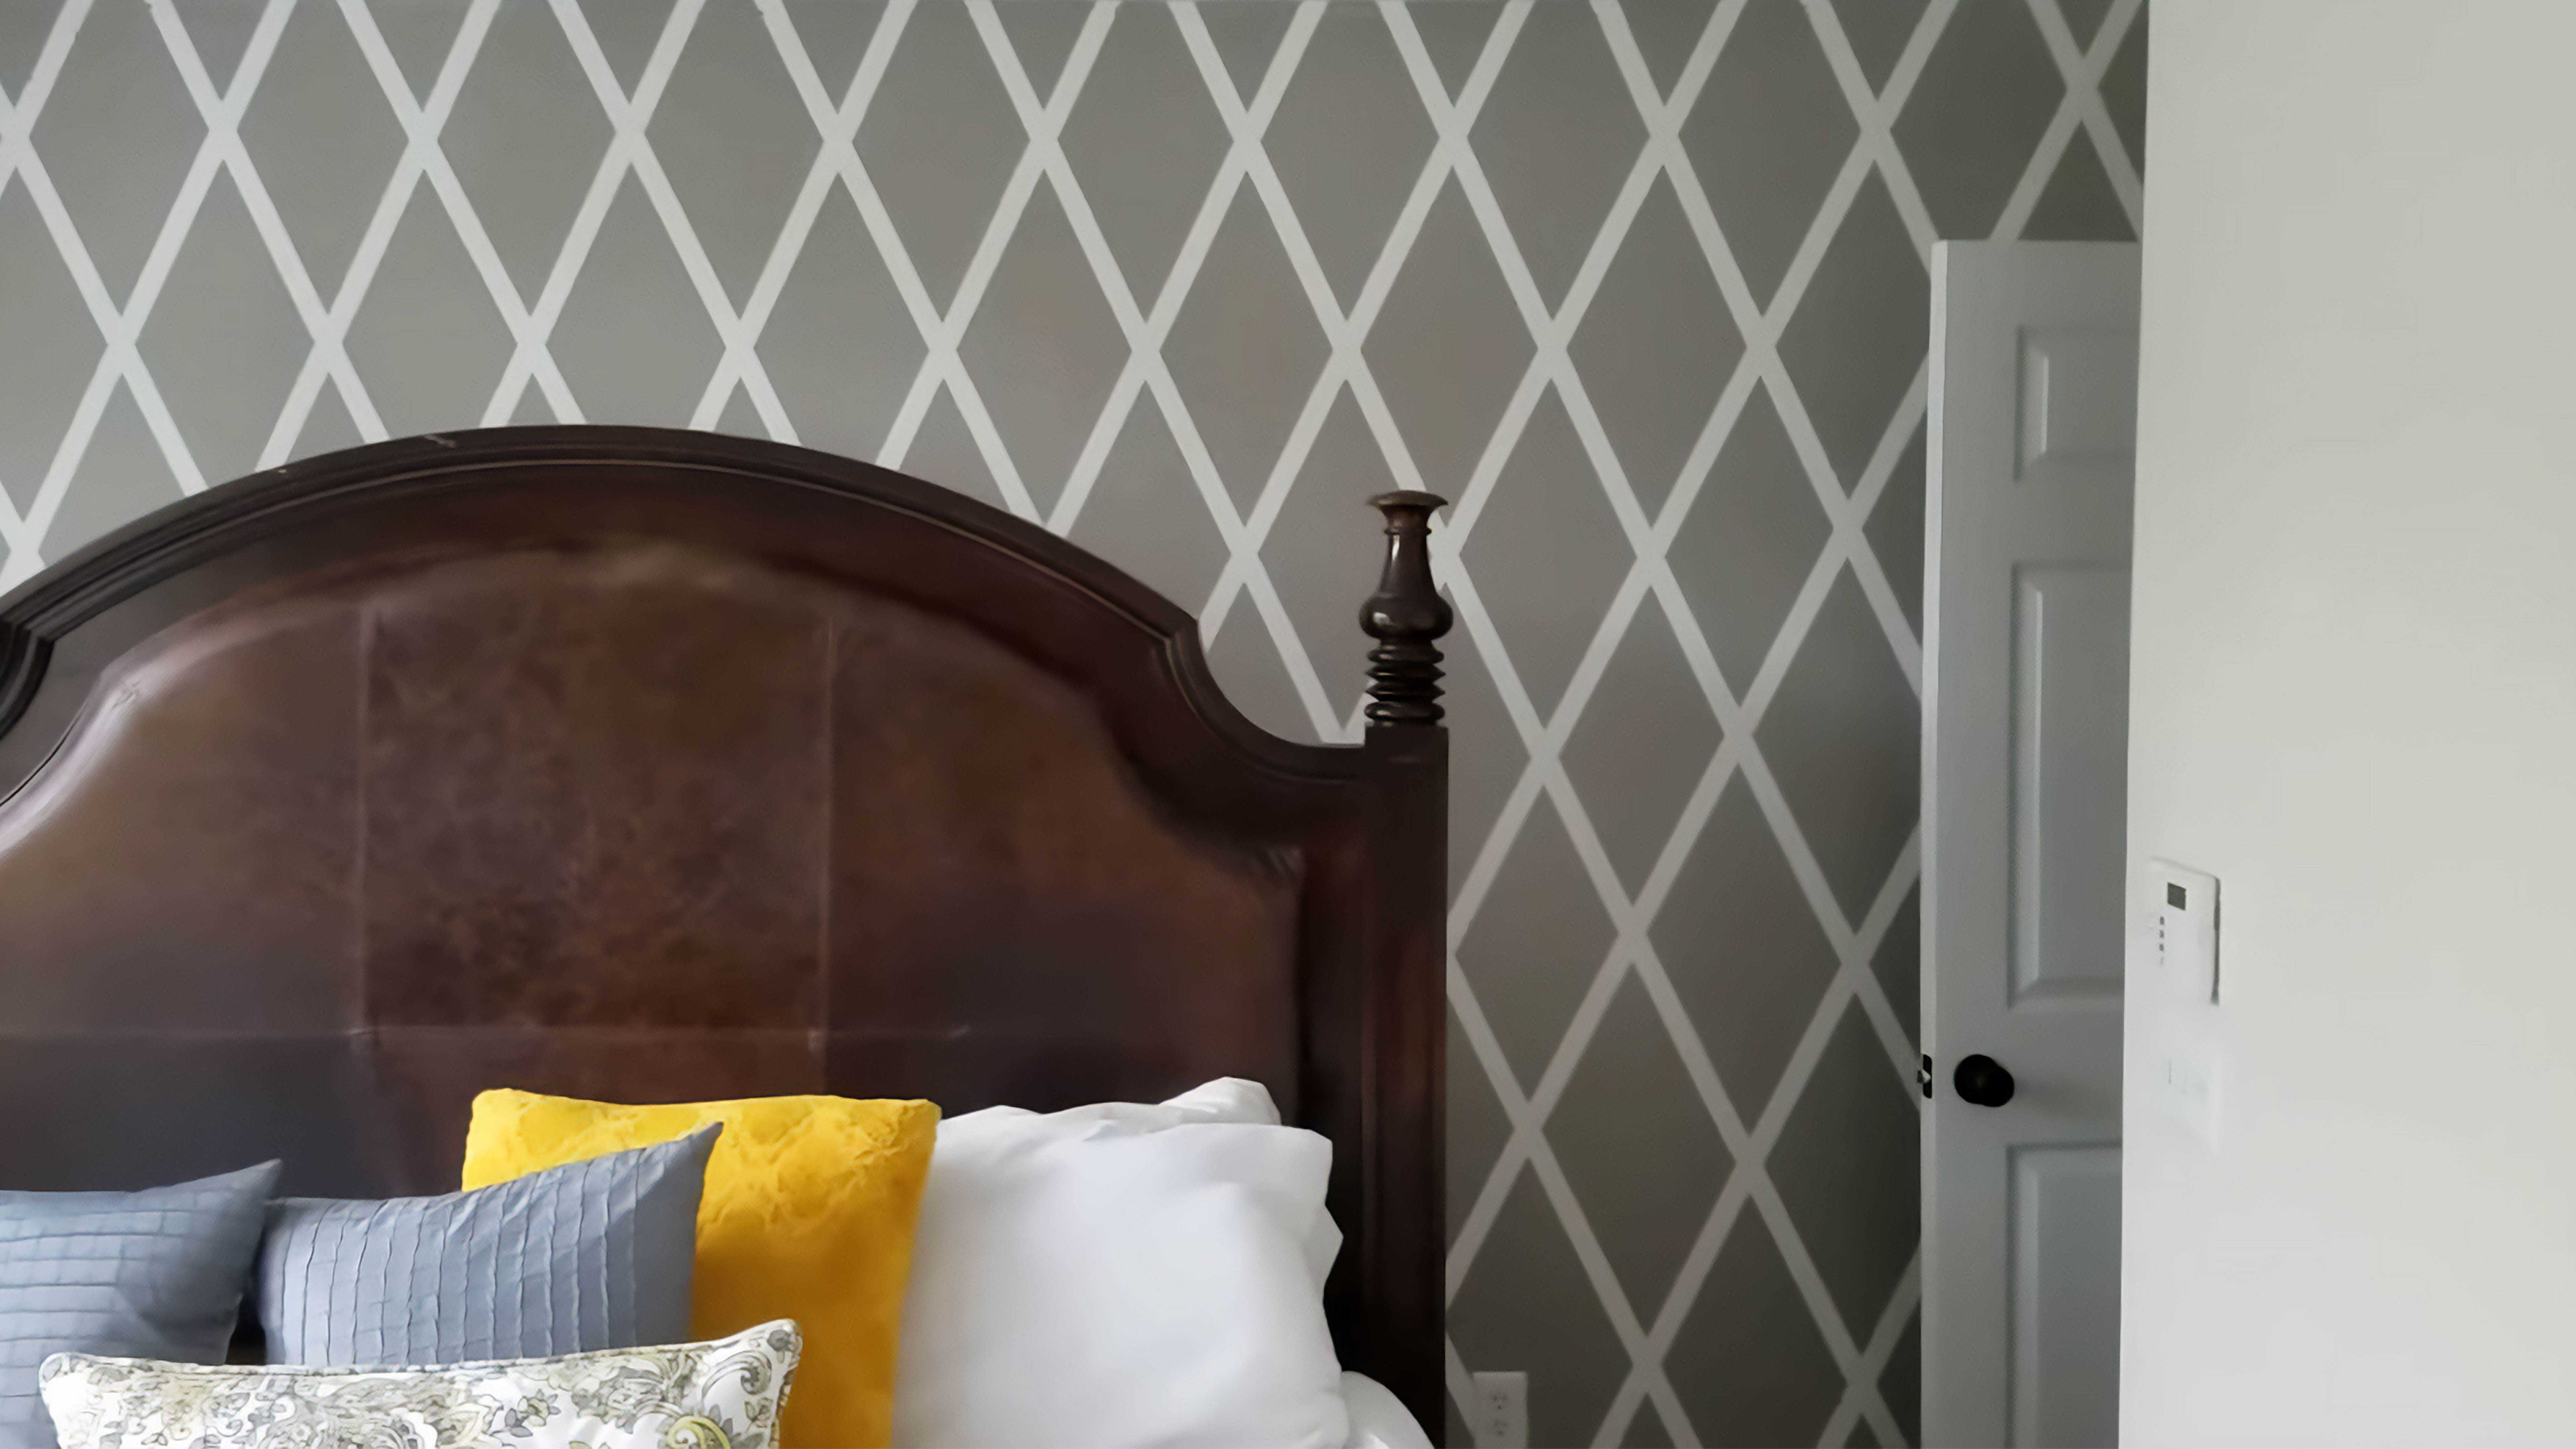 Diamonds pattern wall for bedroom.